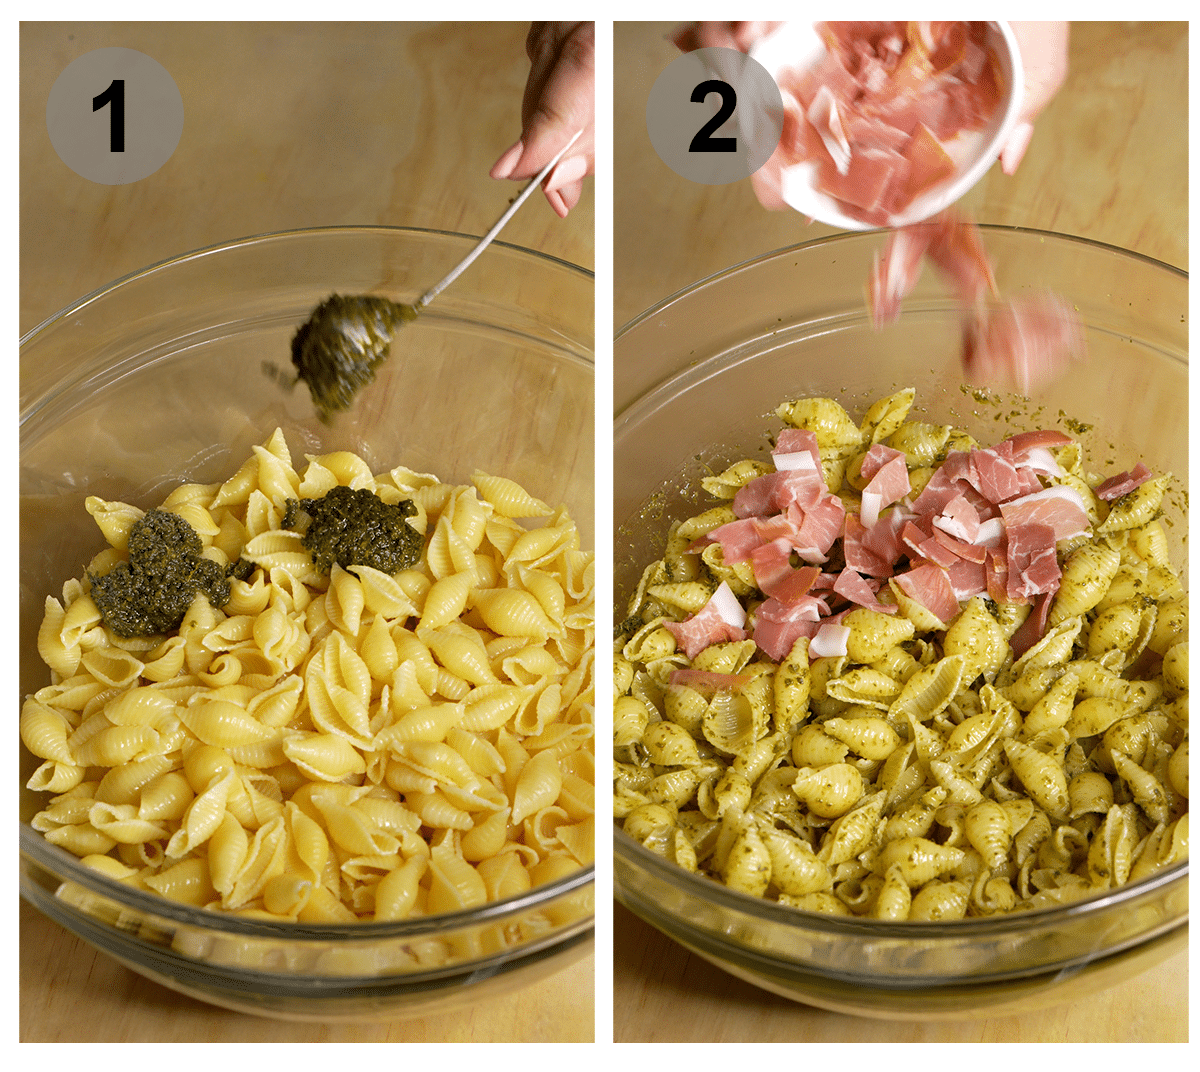 Step by step photos on how to make arugula pasta salad (steps #1-2)